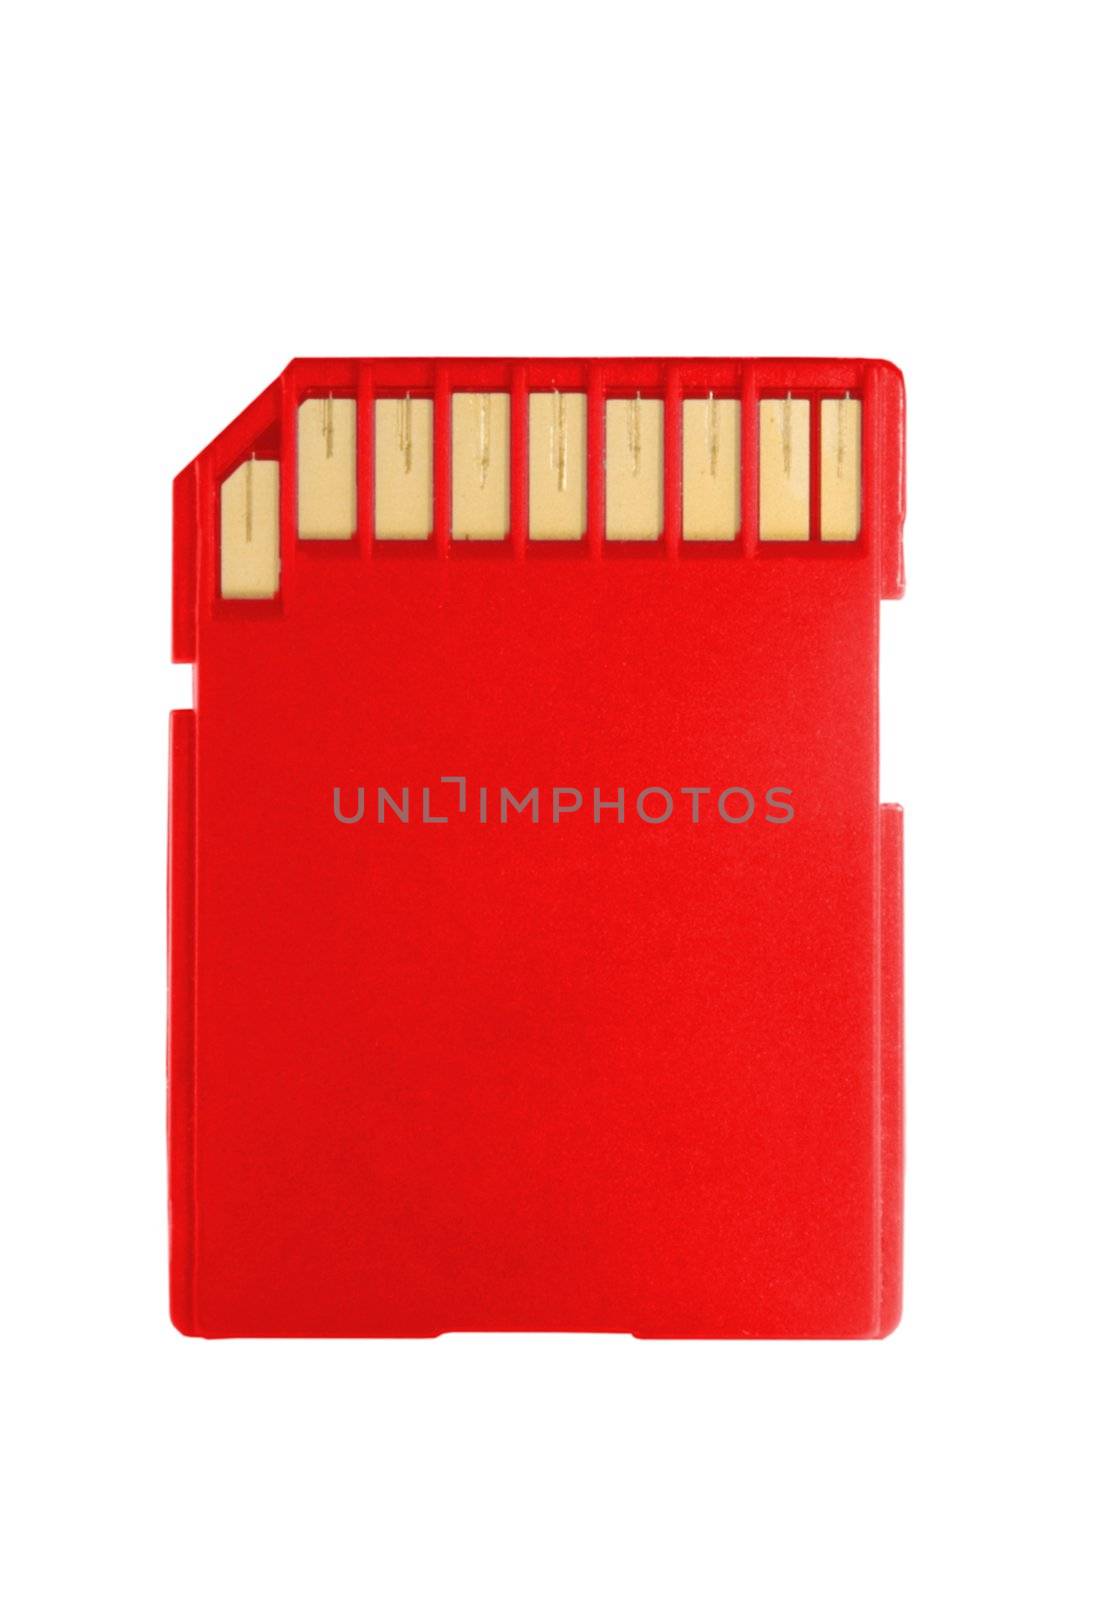 color memory sd card data storage device for cameras, portable sound